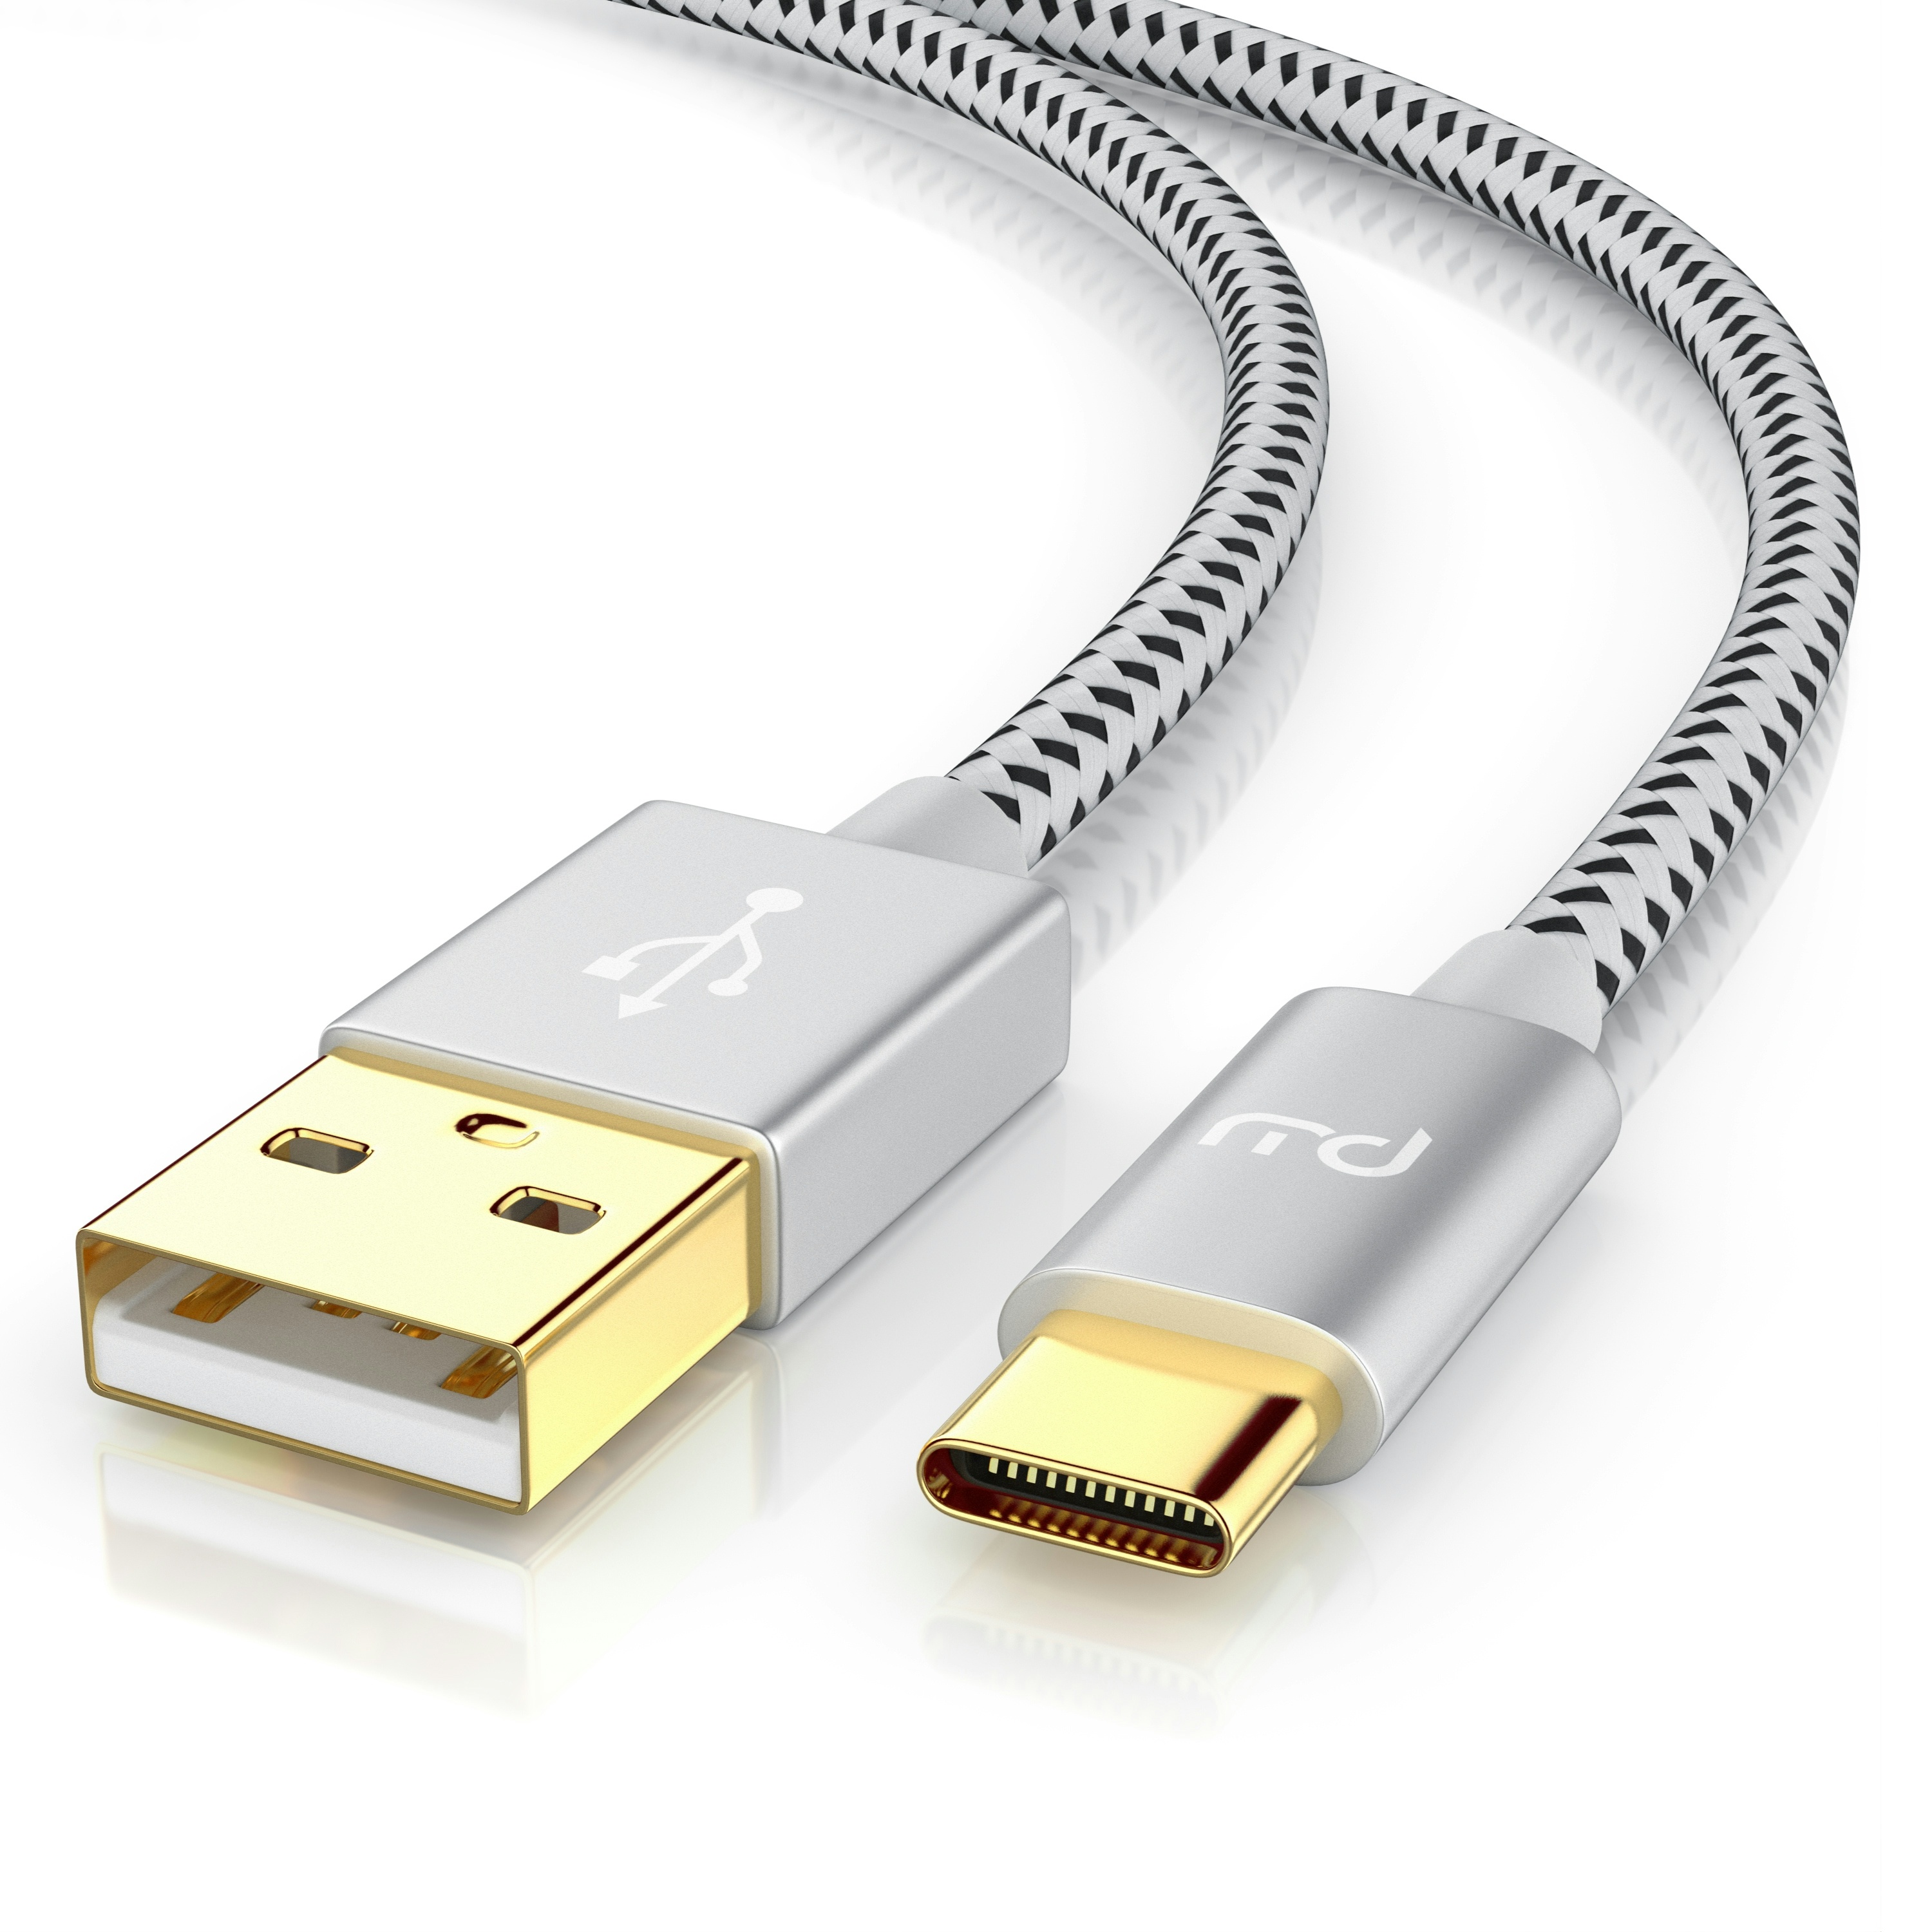 Primewire USB-C 3.1 zu USB 3.0 Typ A Kabel, Ladekabel, Datenkabel, Adapterkabel für Smartphone & Tablet - 1m